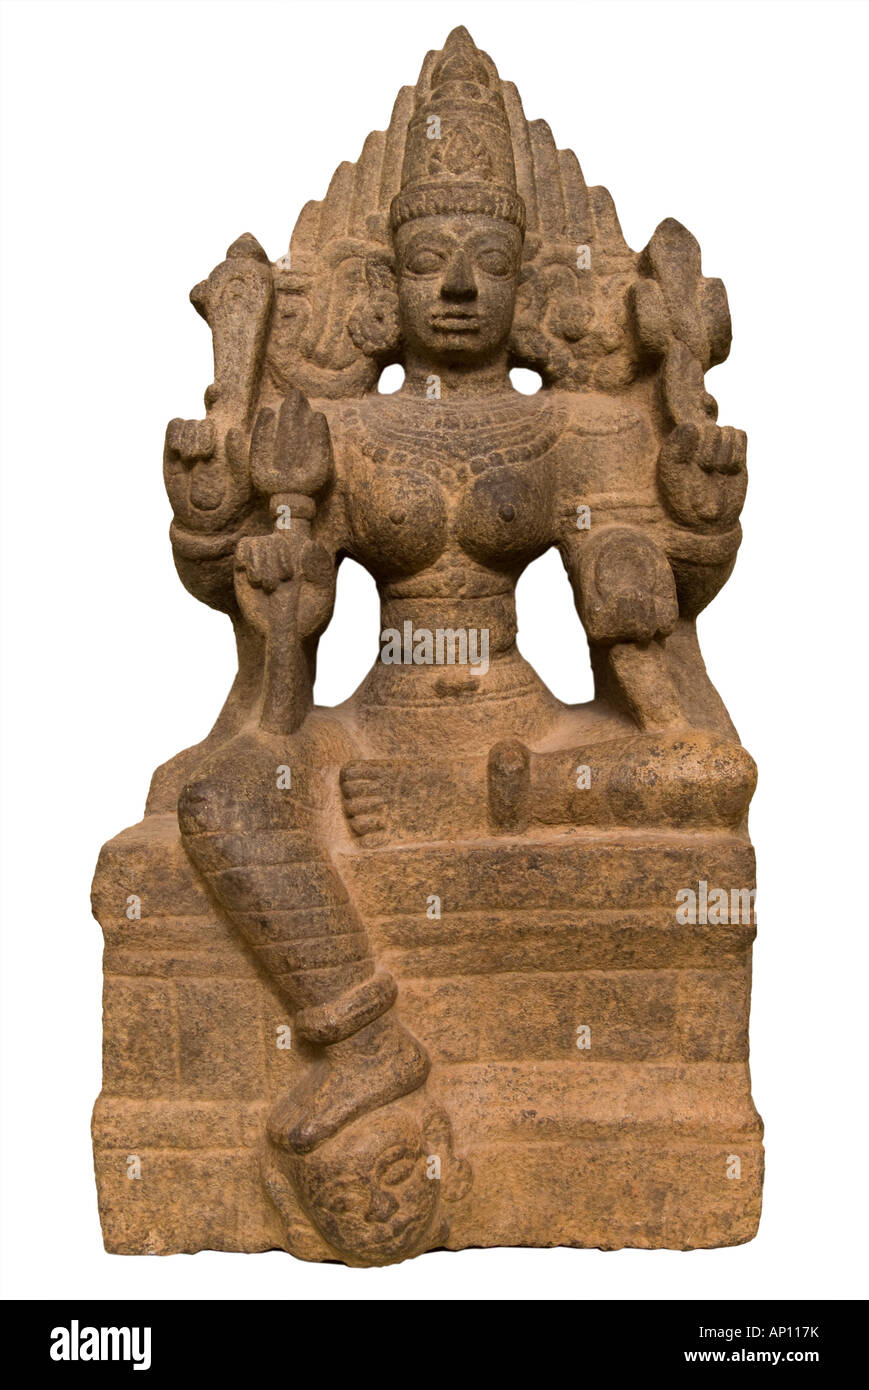 mahakali granite south india late vijayanagar style 17 century ad fierce godess associated with death seated with foot on head o Stock Photo